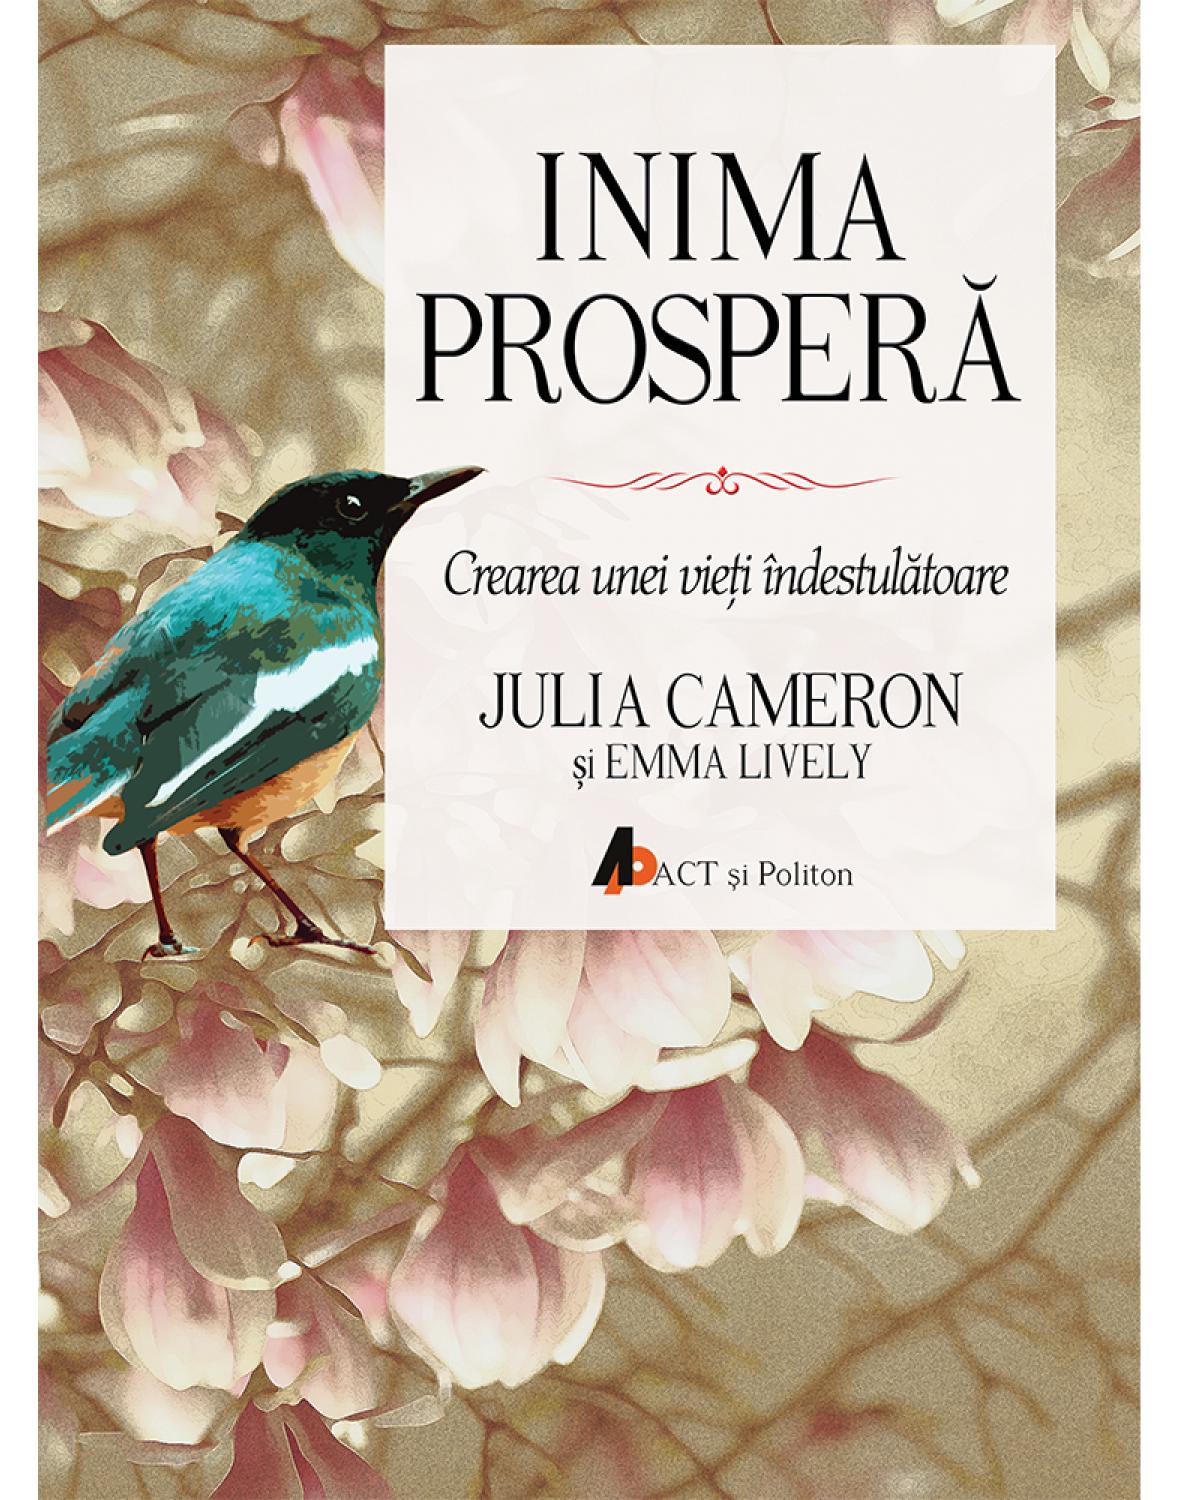 Inima prospera - Julia Cameron, Emma Lively